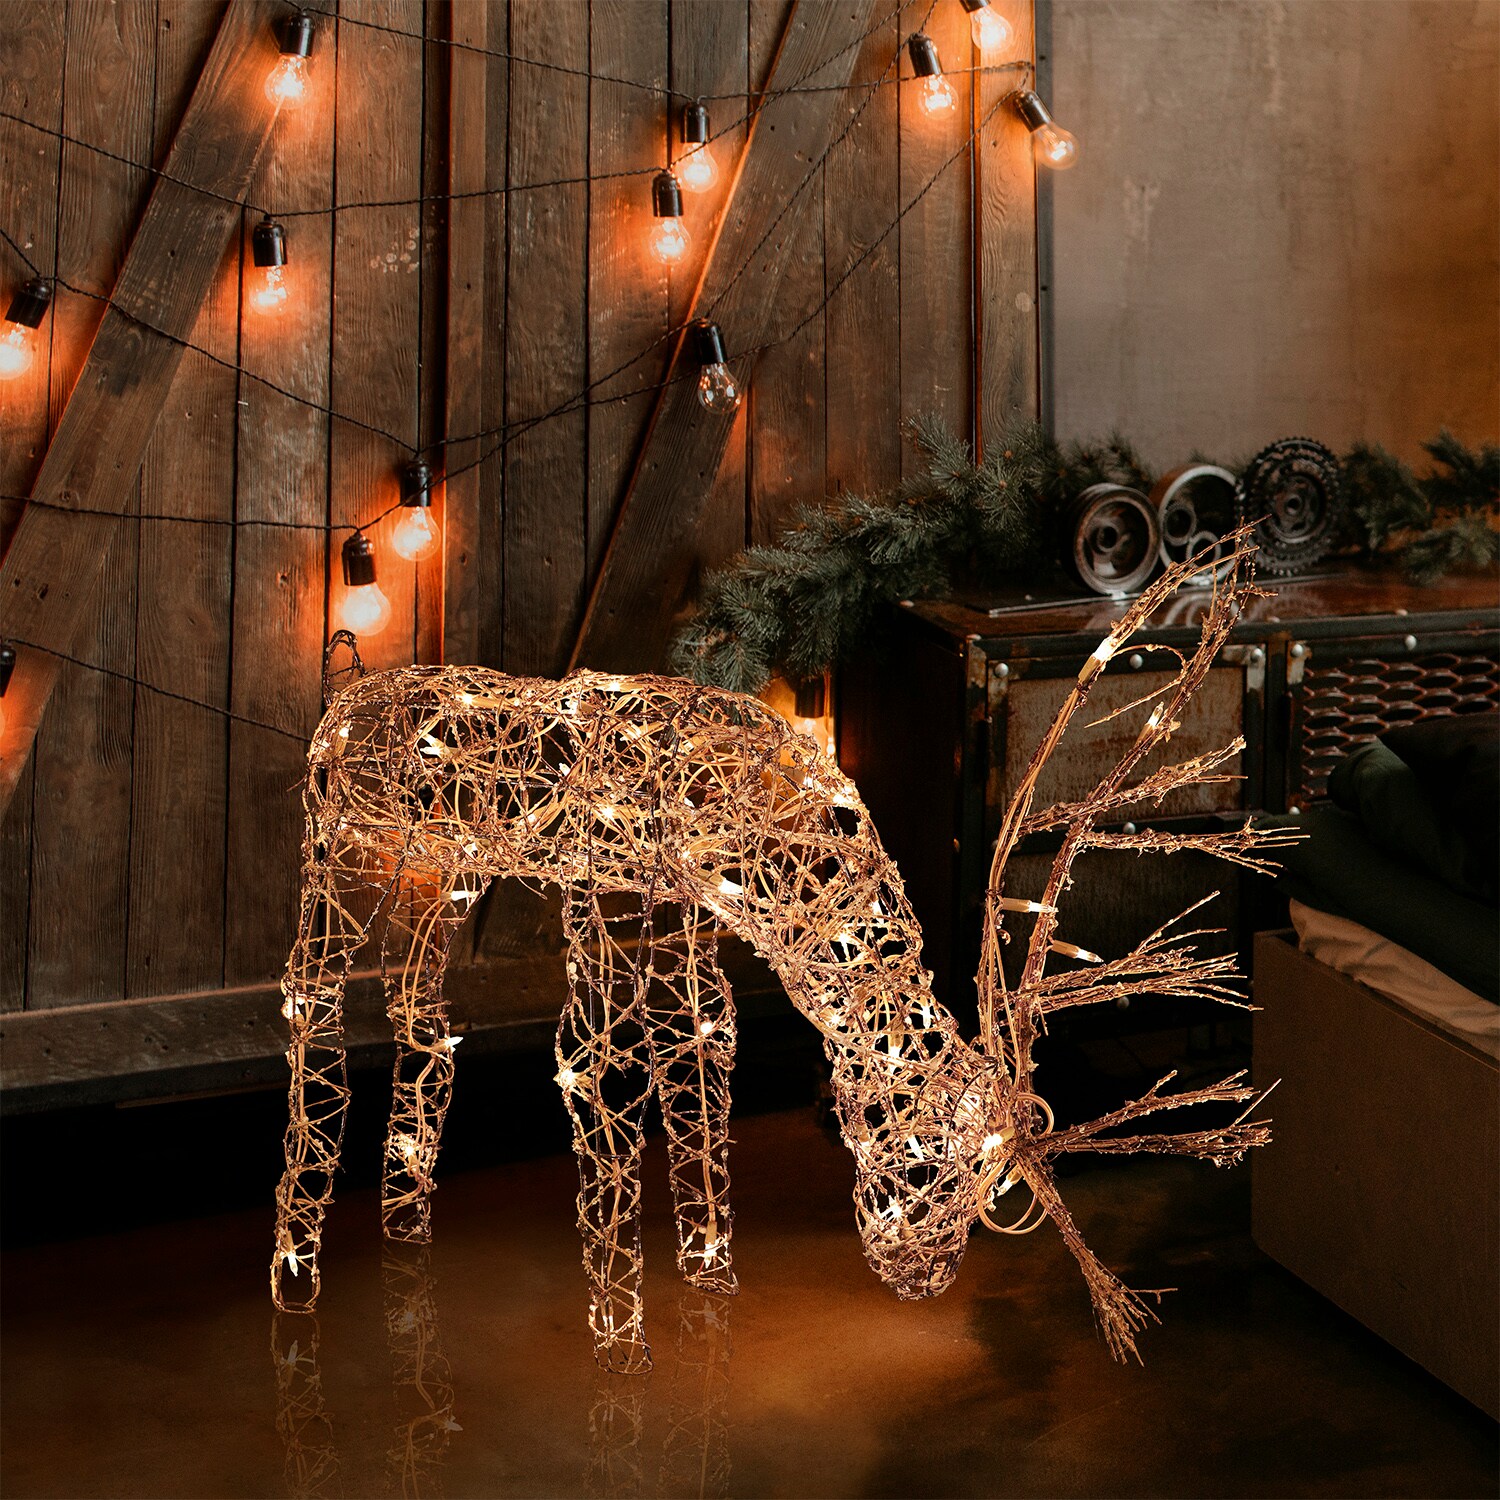 Festive Feeling Light Up Reindeer With 20 LED Lights 